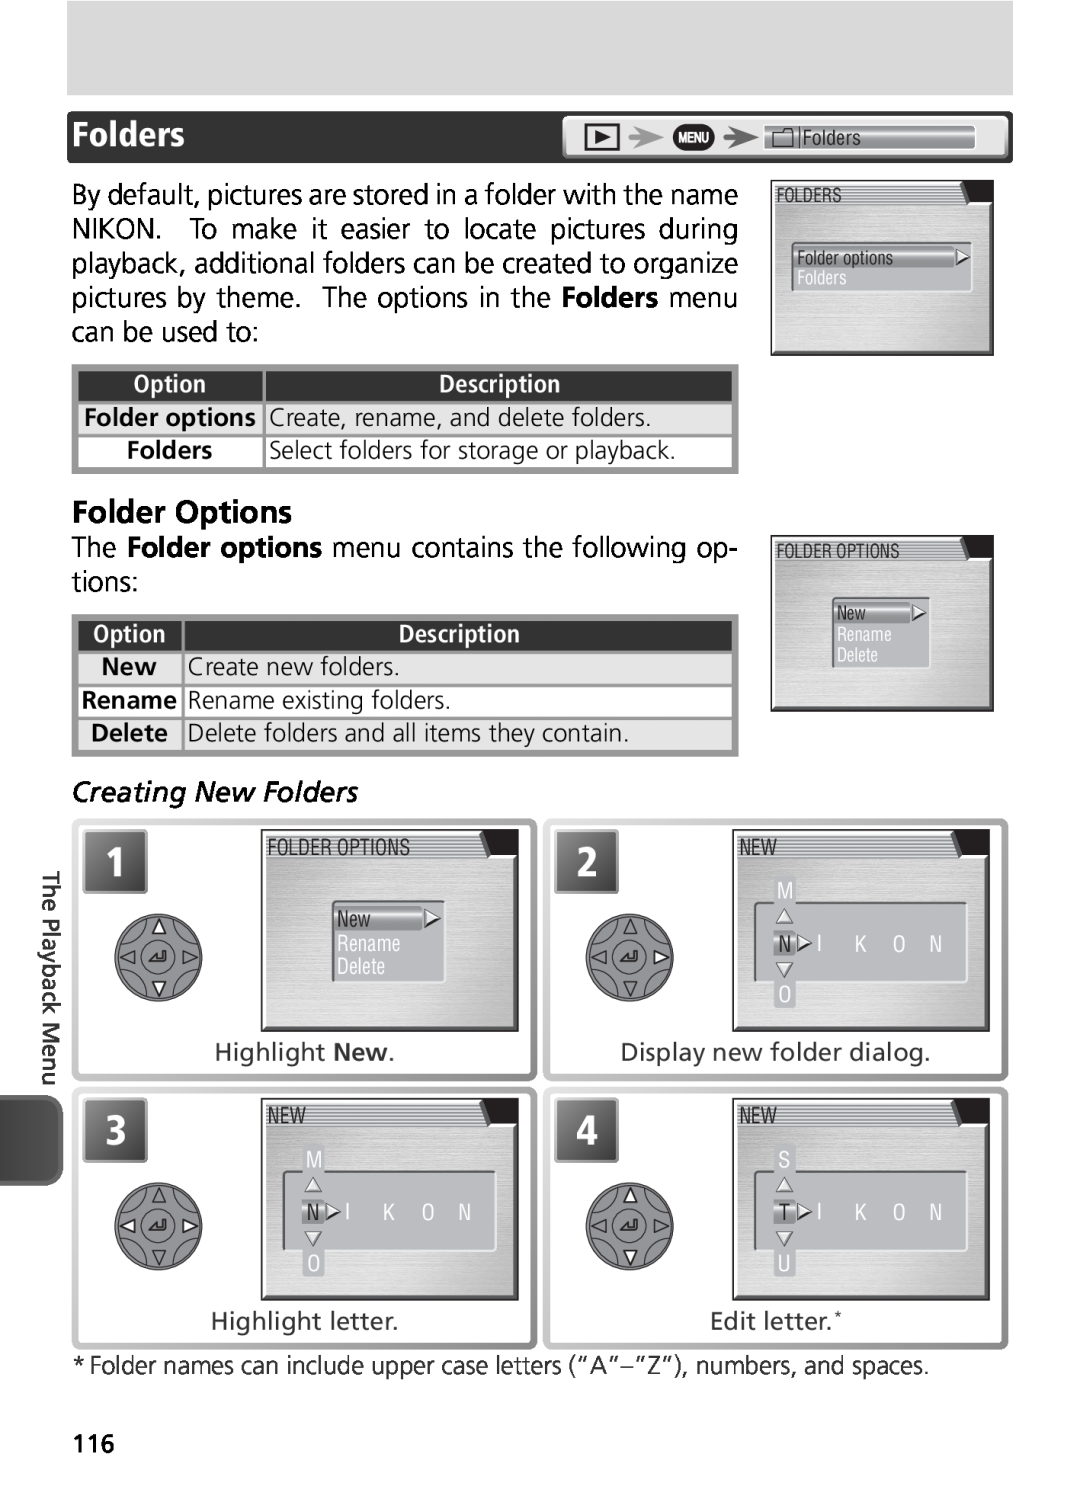 Nikon COOLPIX8800 manual Folder Options, Creating New Folders 